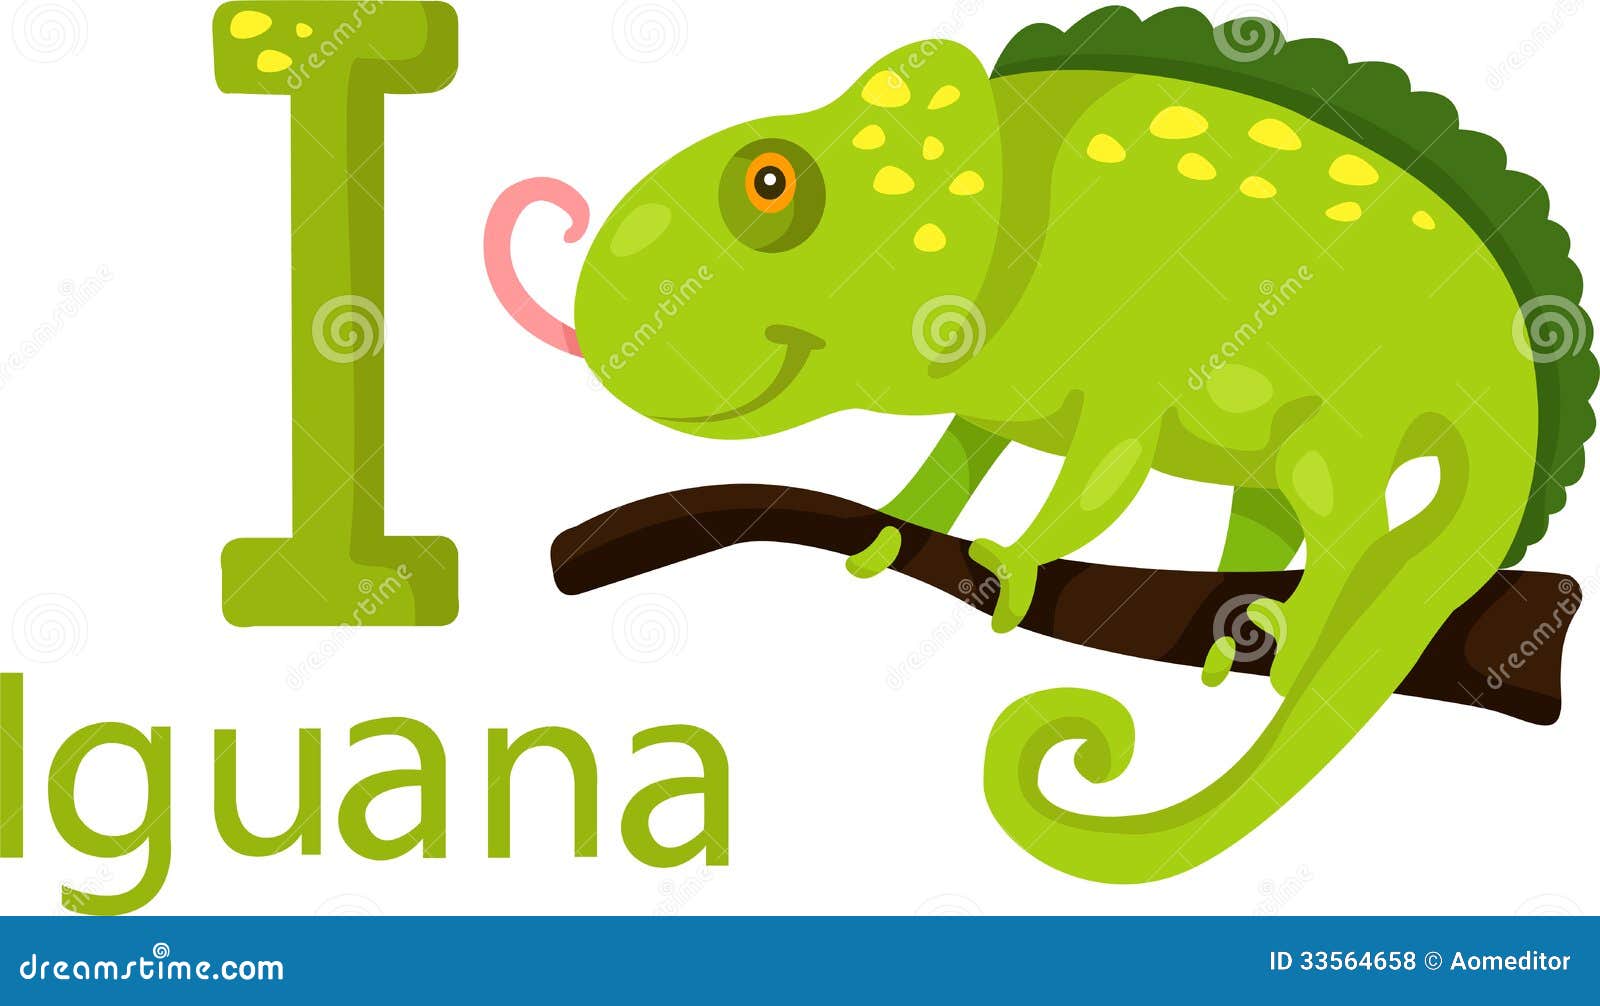 iguana vector